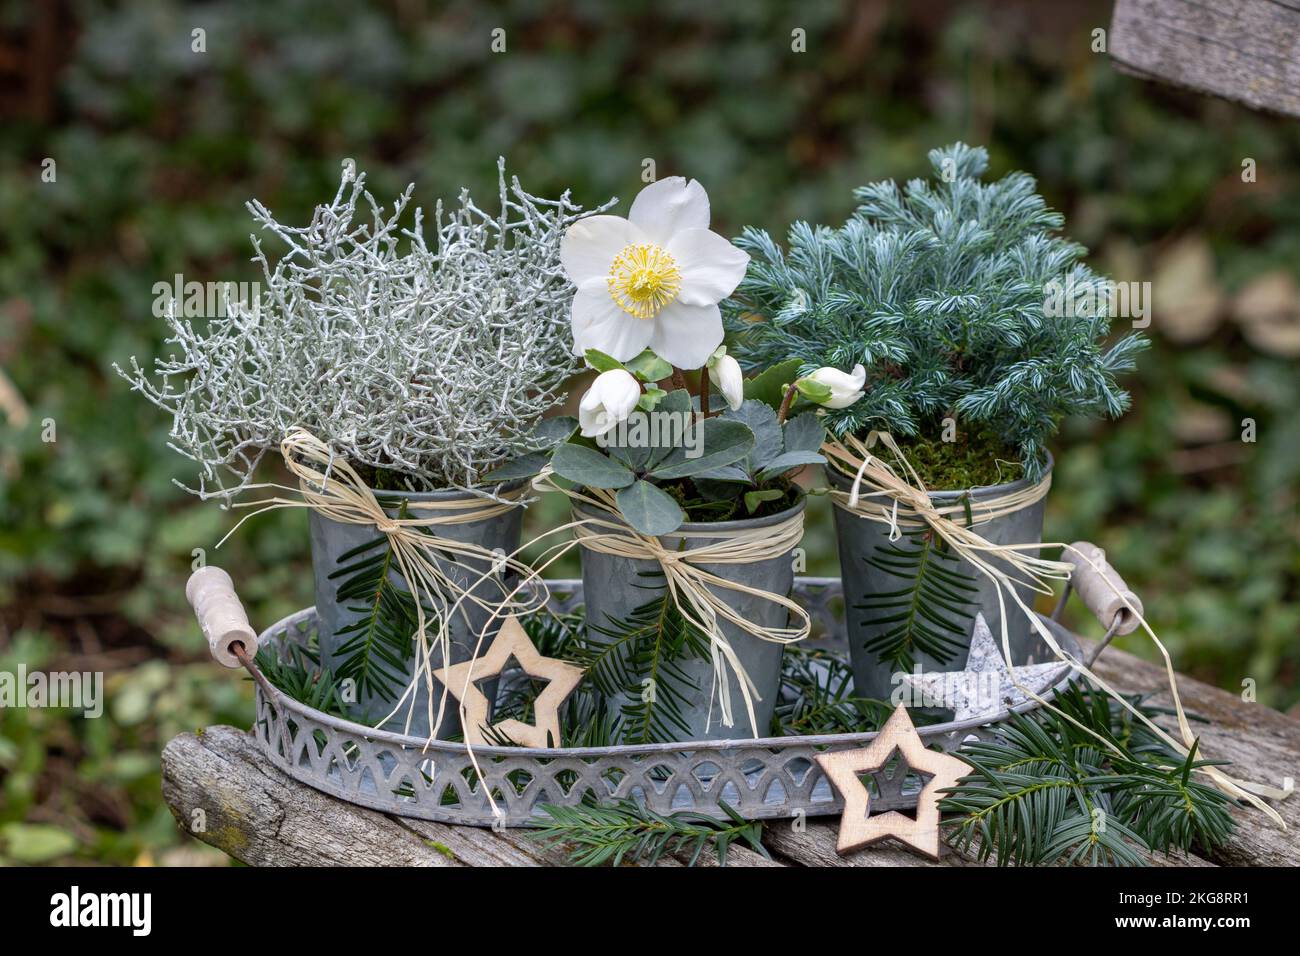 arrangement with helleborus niger, cushion bush and Japanese cypress in zinc pots in winter garden Stock Photo